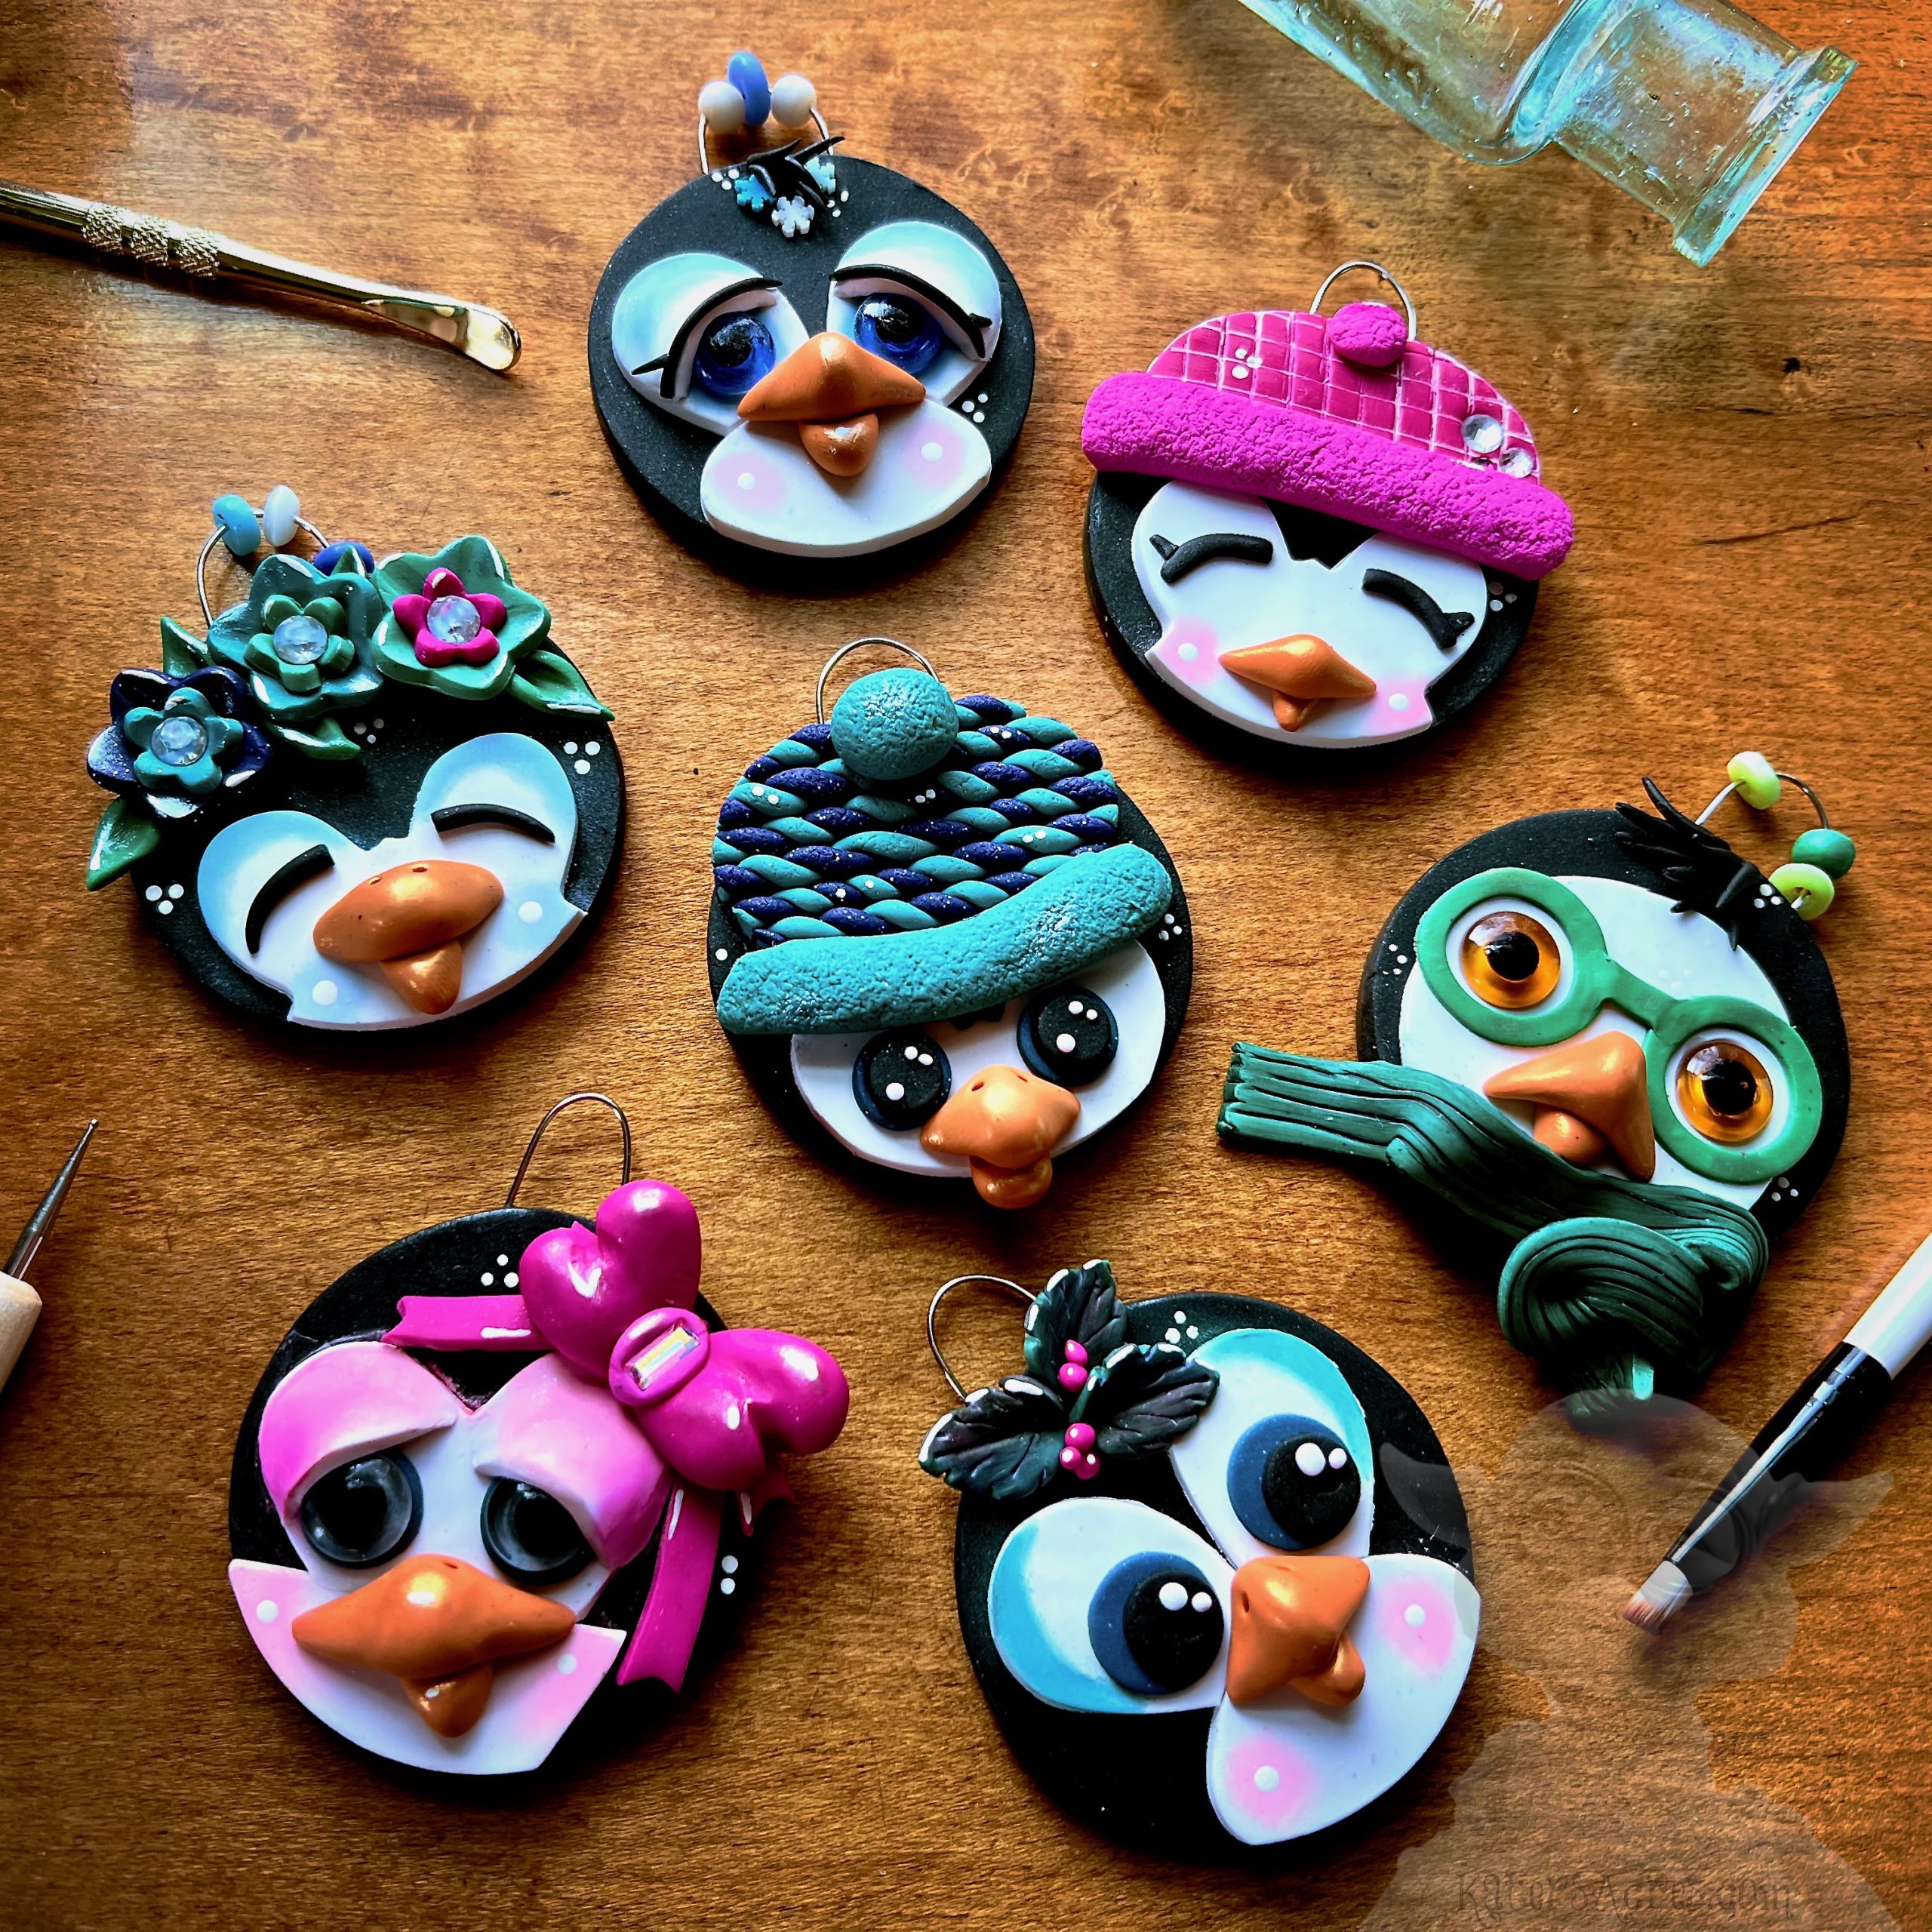 Penguin Ornaments by KatersAcres